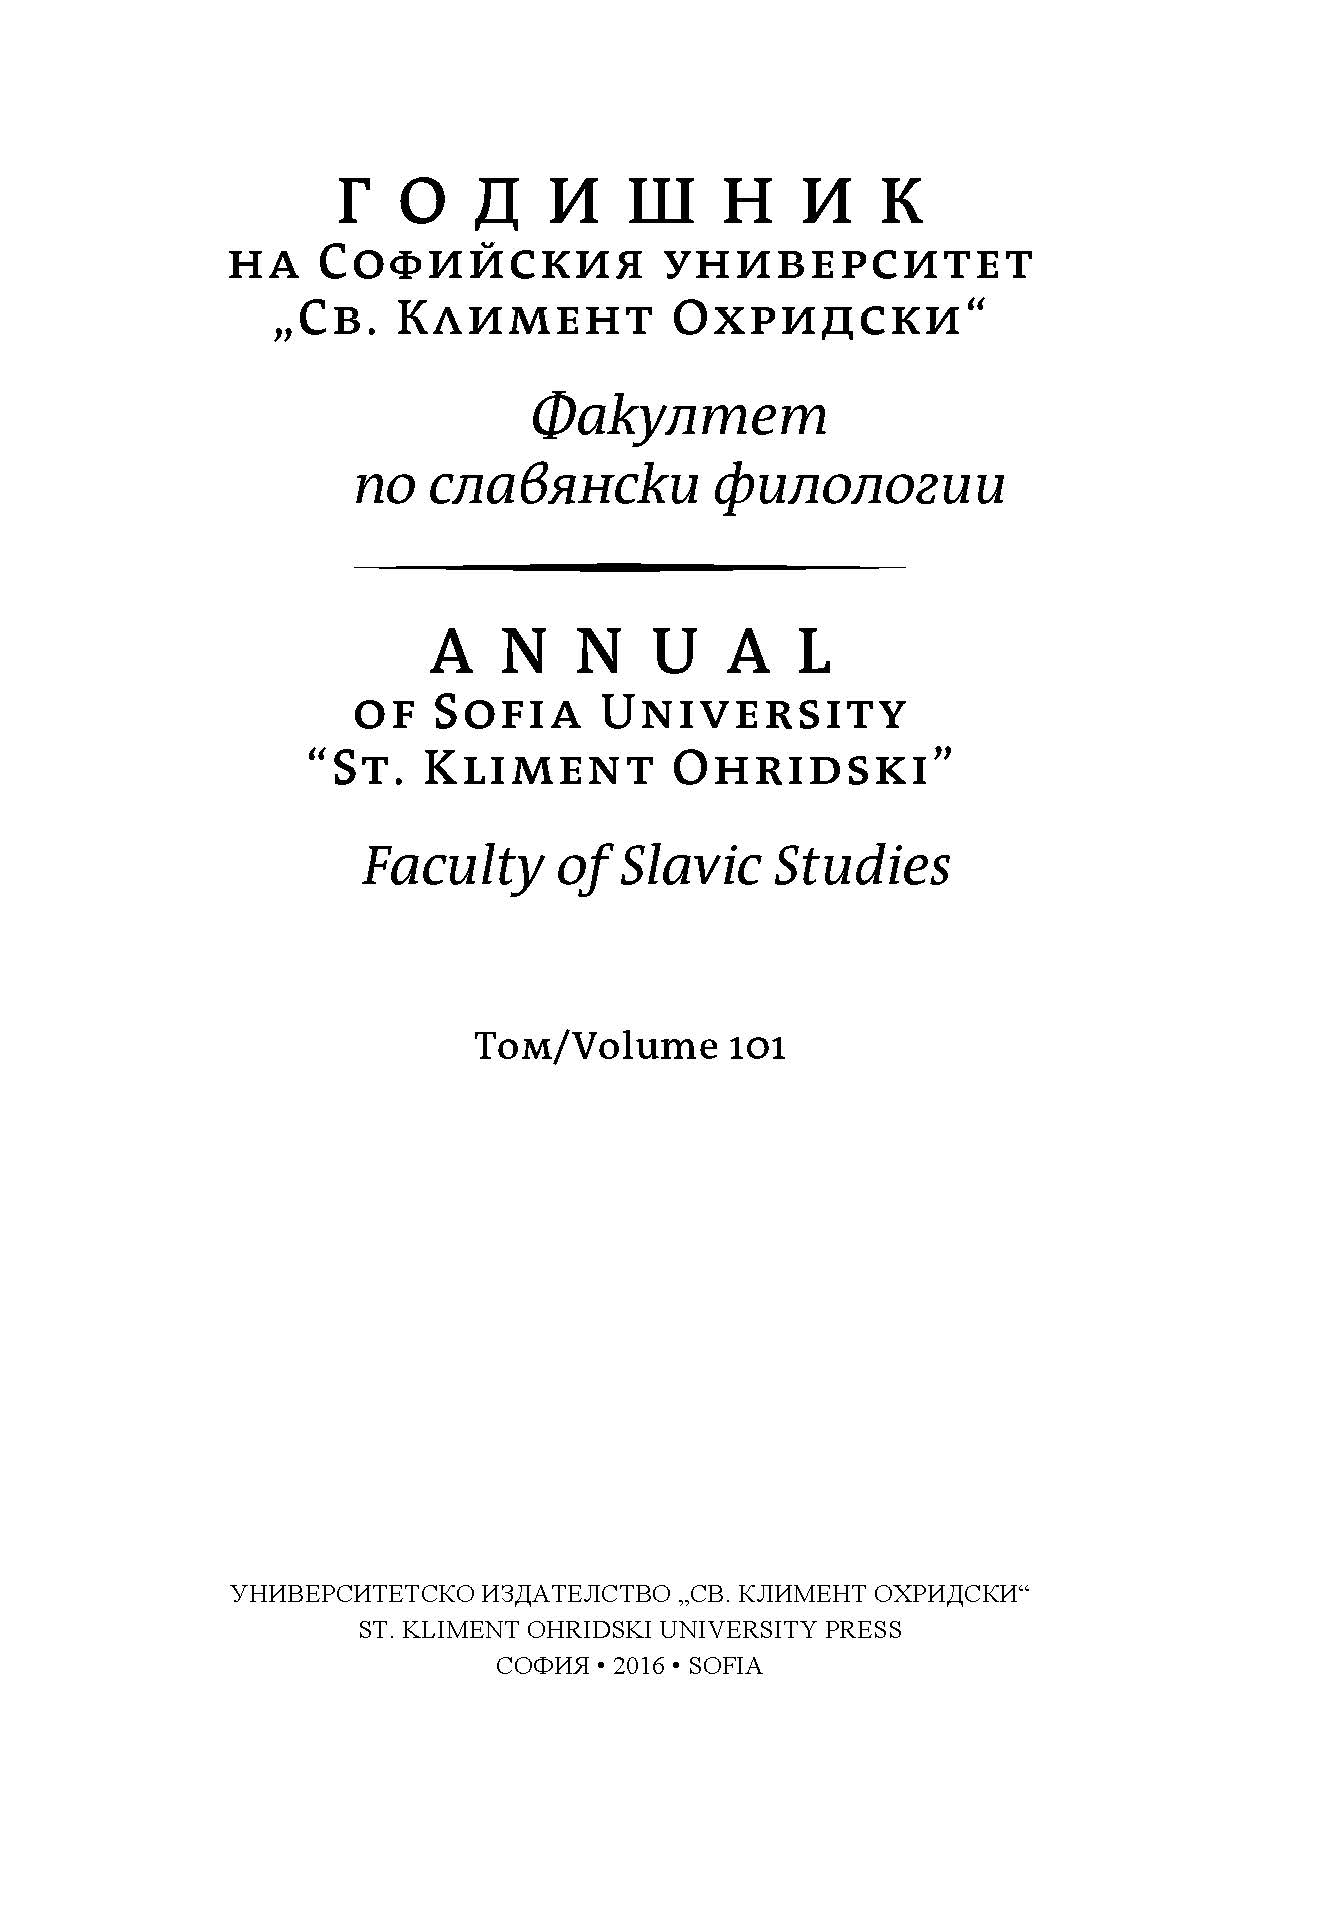 Annual of Sofia University “St. Kliment Ohridski”, Faculty of Slavic Studies